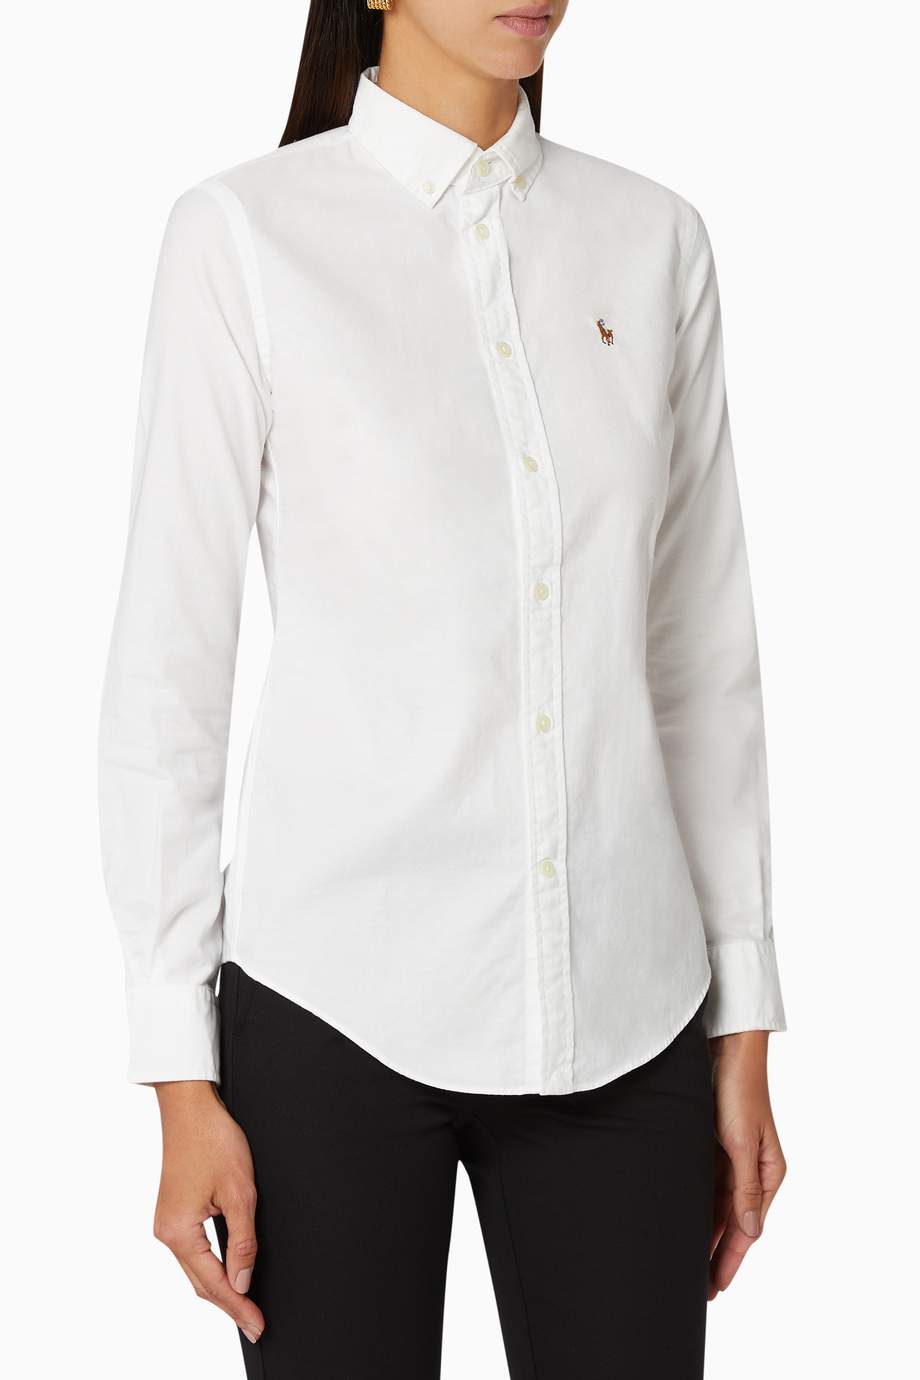 Shop Polo Ralph Lauren White Slim Fit Cotton Oxford Shirt for Women ...